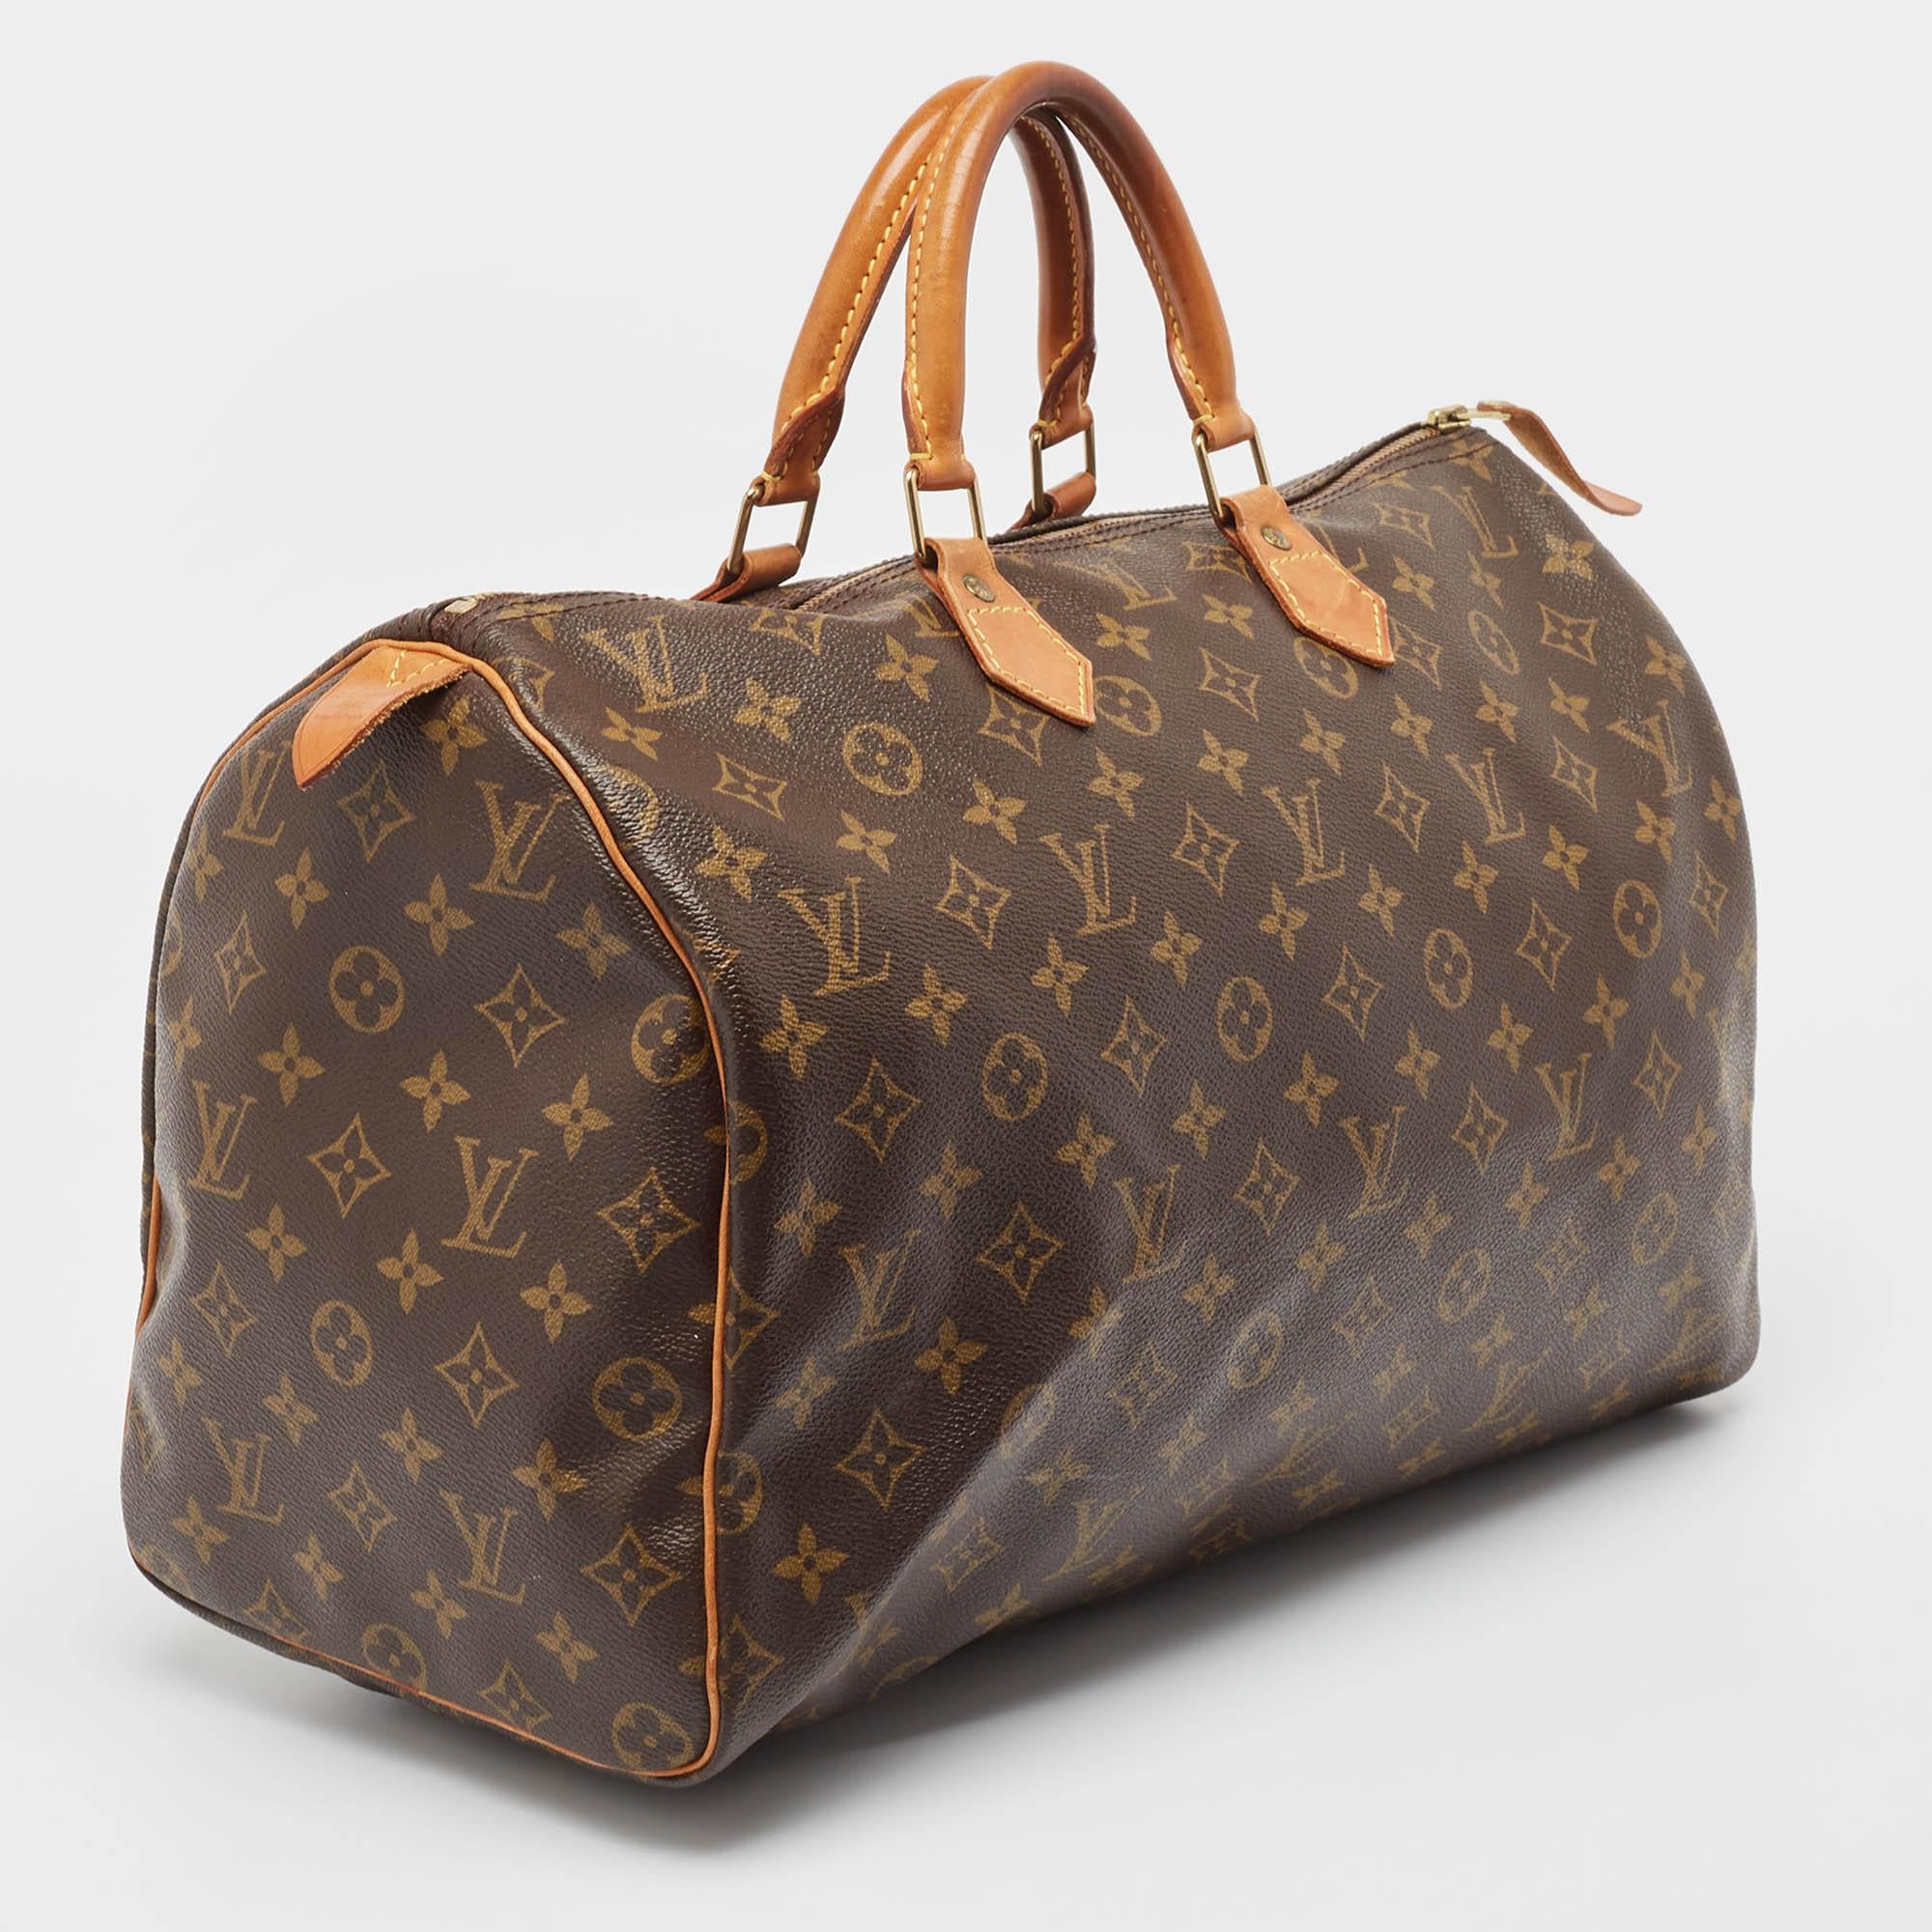 Louis Vuitton Louis Vuitton Monogram Canvas Speedy 40 Bag In Good Condition For Sale In Dubai, Al Qouz 2